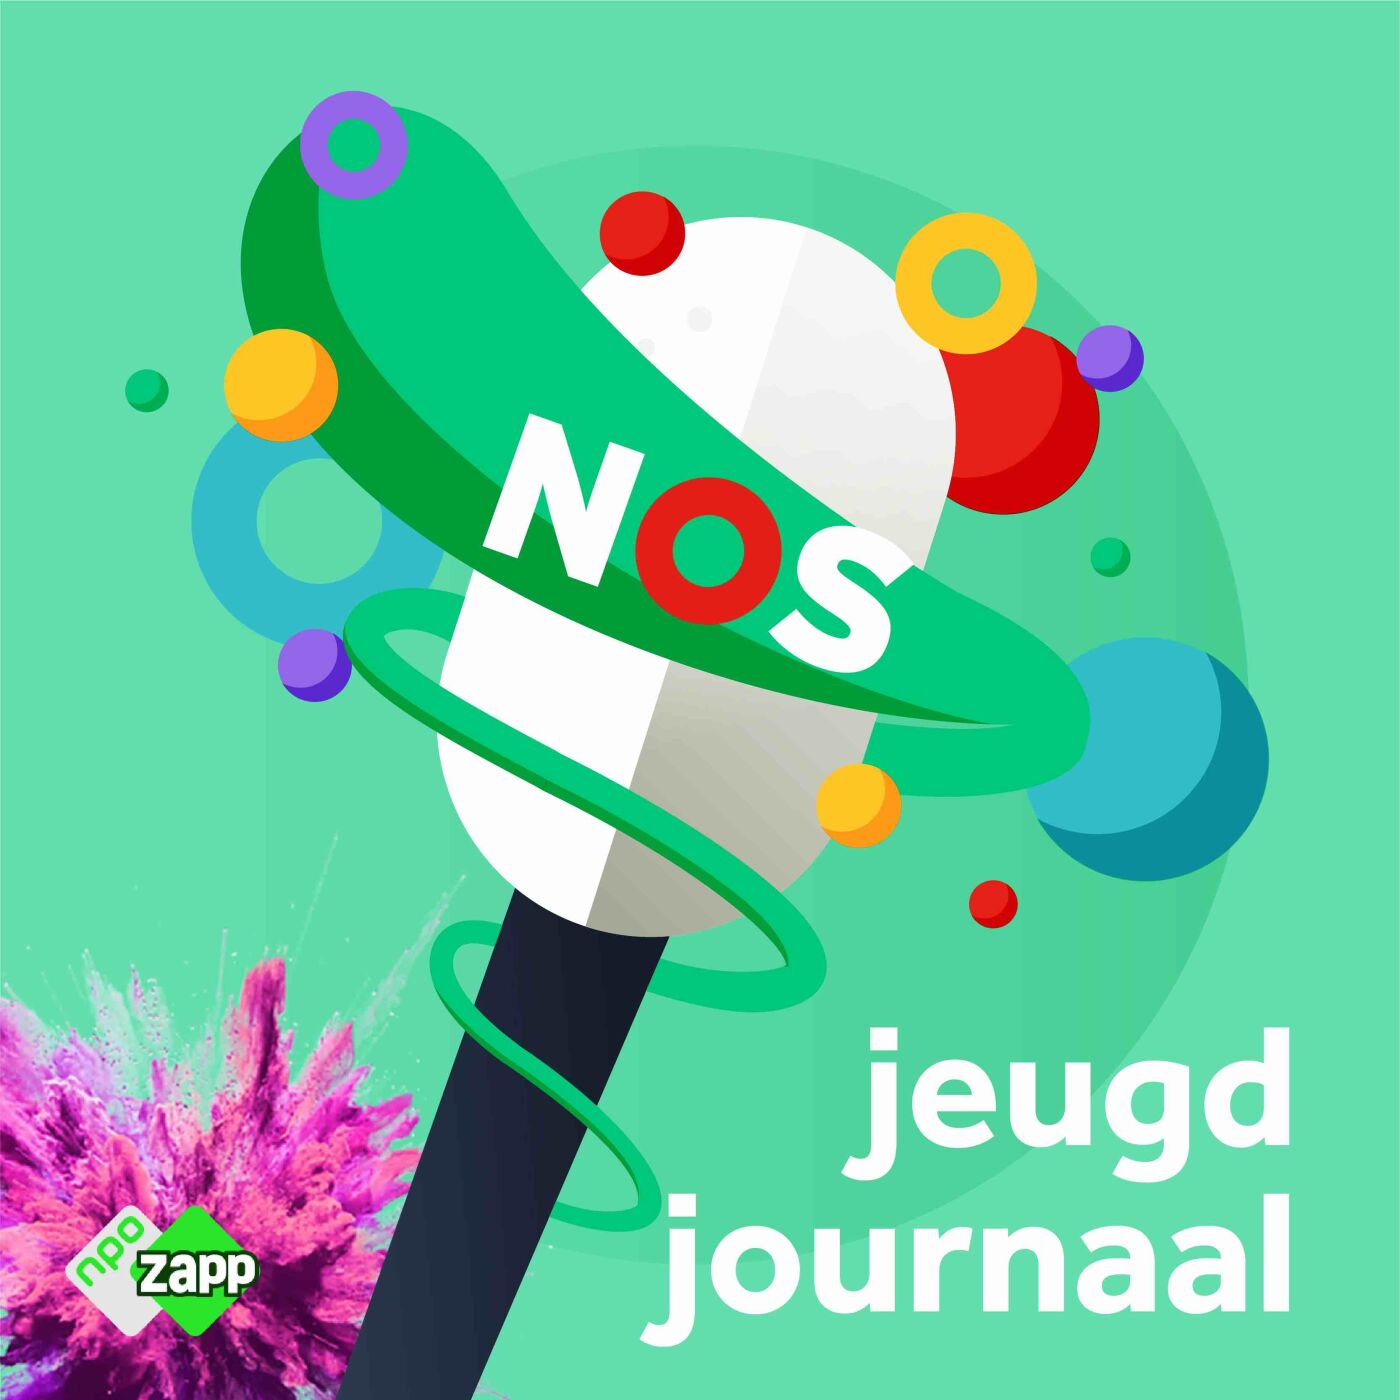 NOS Jeugdjournaal logo